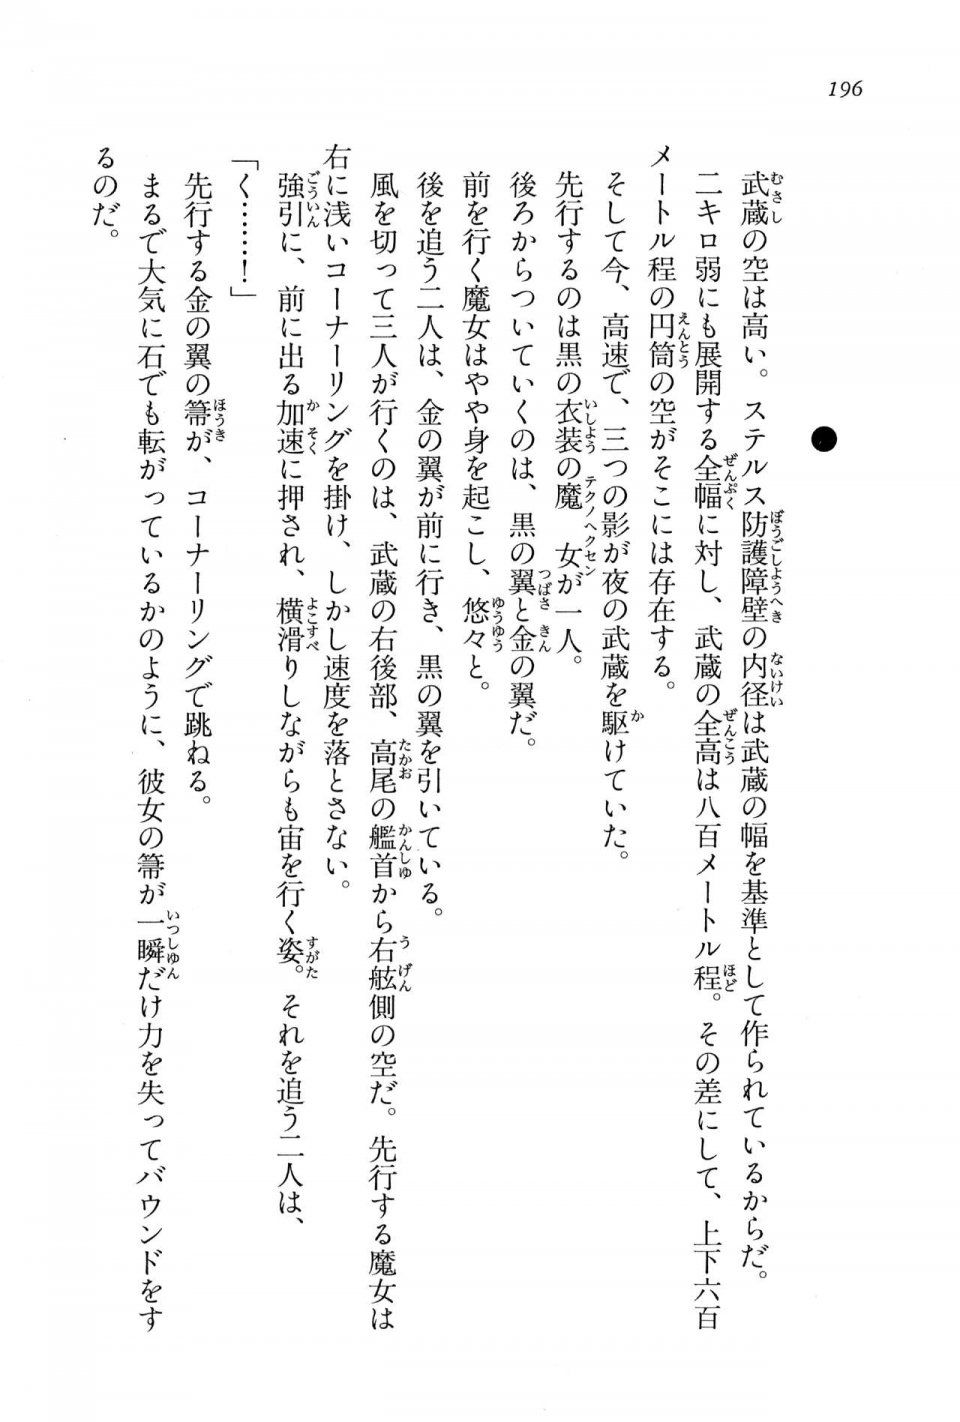 Kyoukai Senjou no Horizon BD Special Mininovel Vol 7(4A) - Photo #200